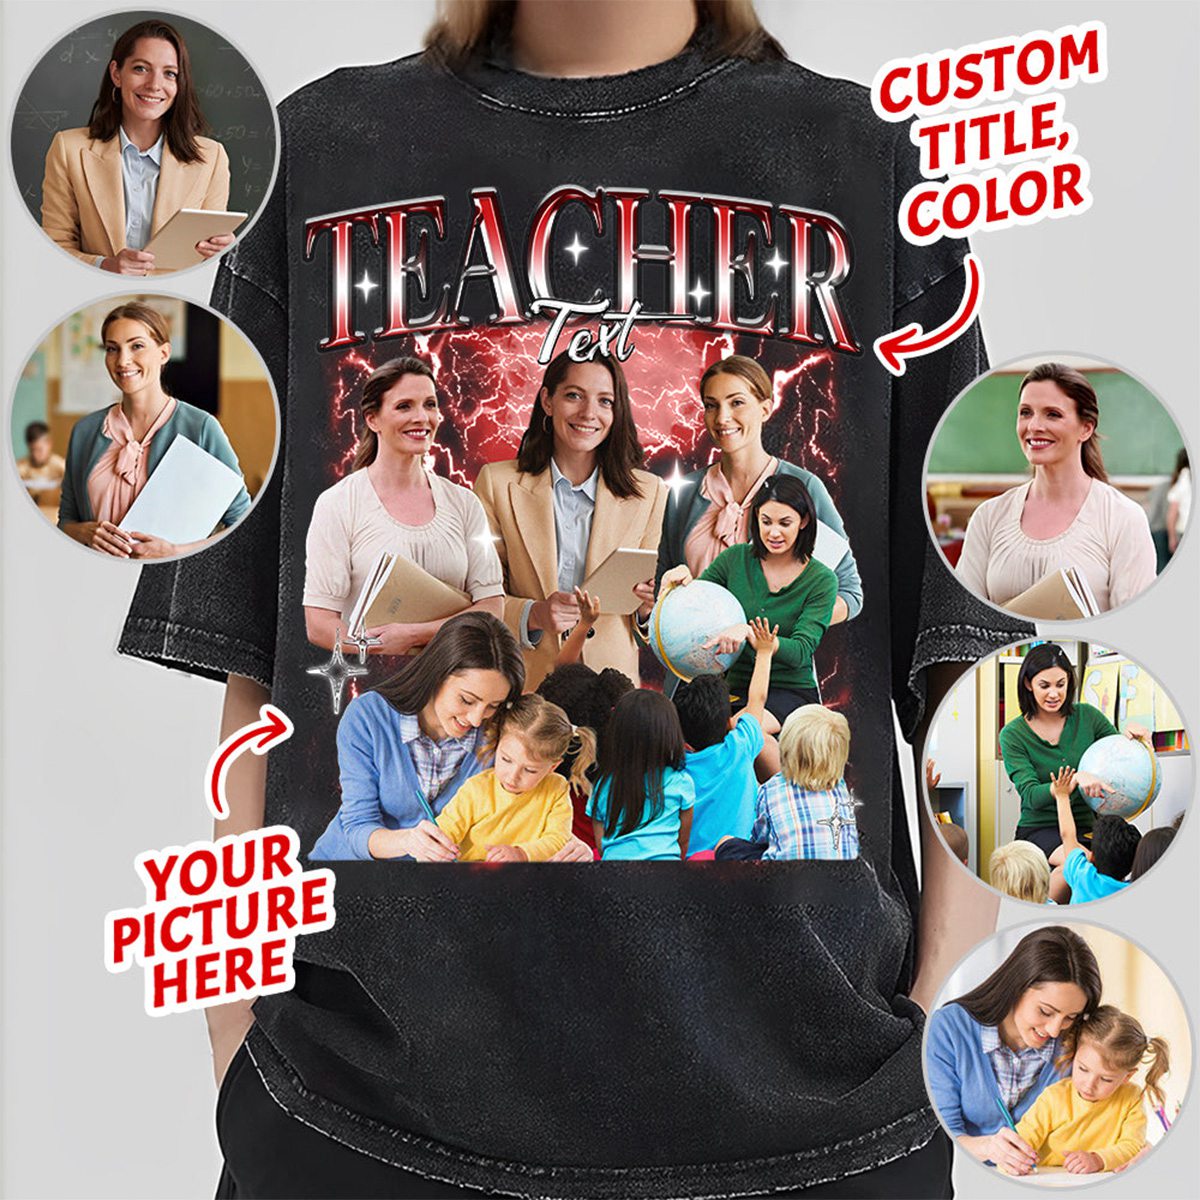 My Best Teacher-Personalized Photo T-Shirt